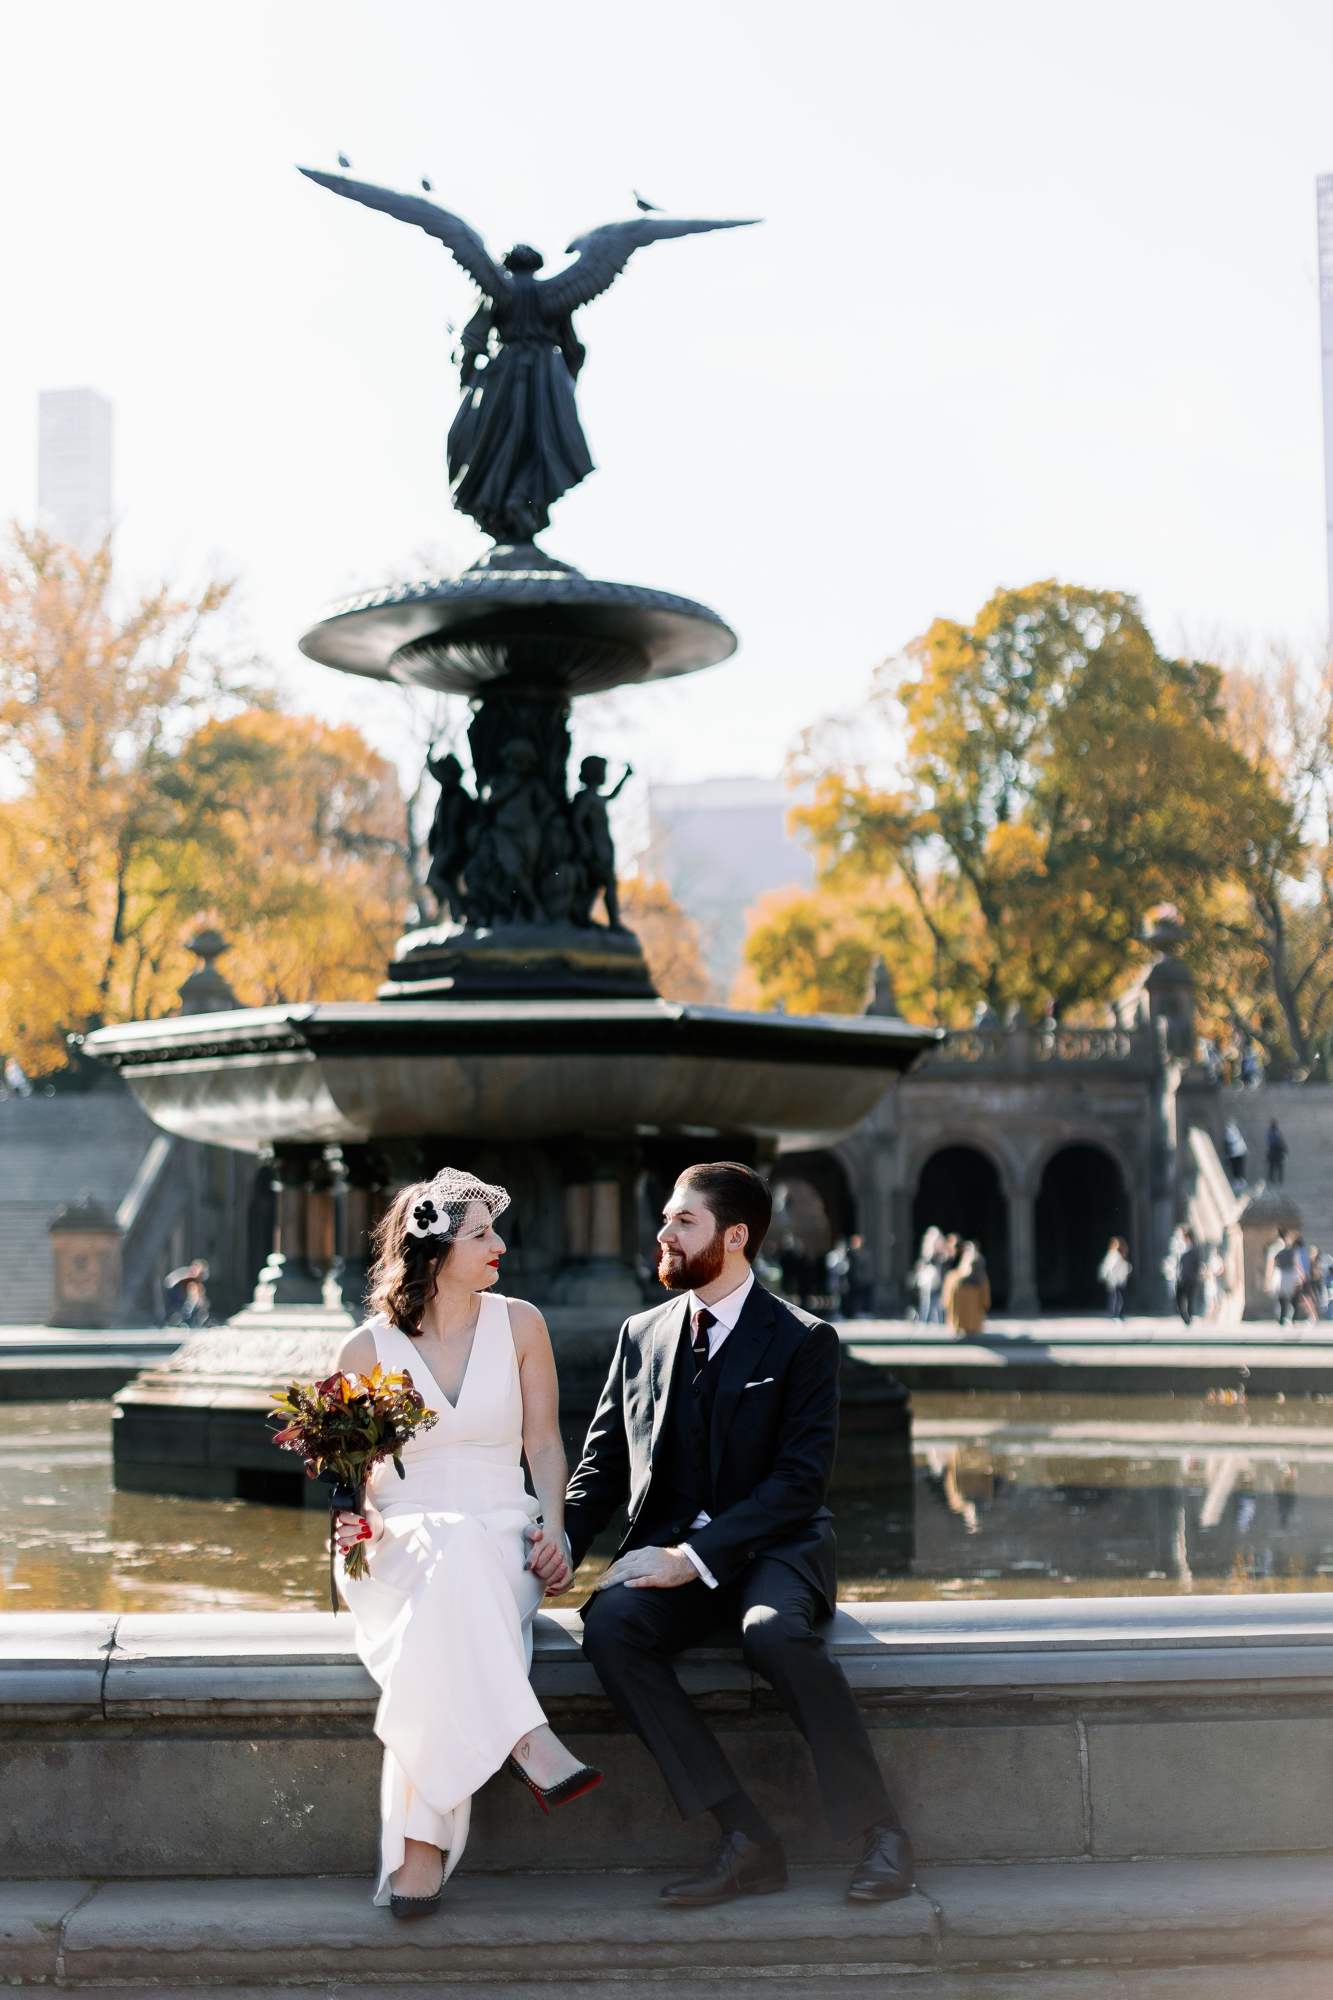 New York's Central Park Engagement Photos